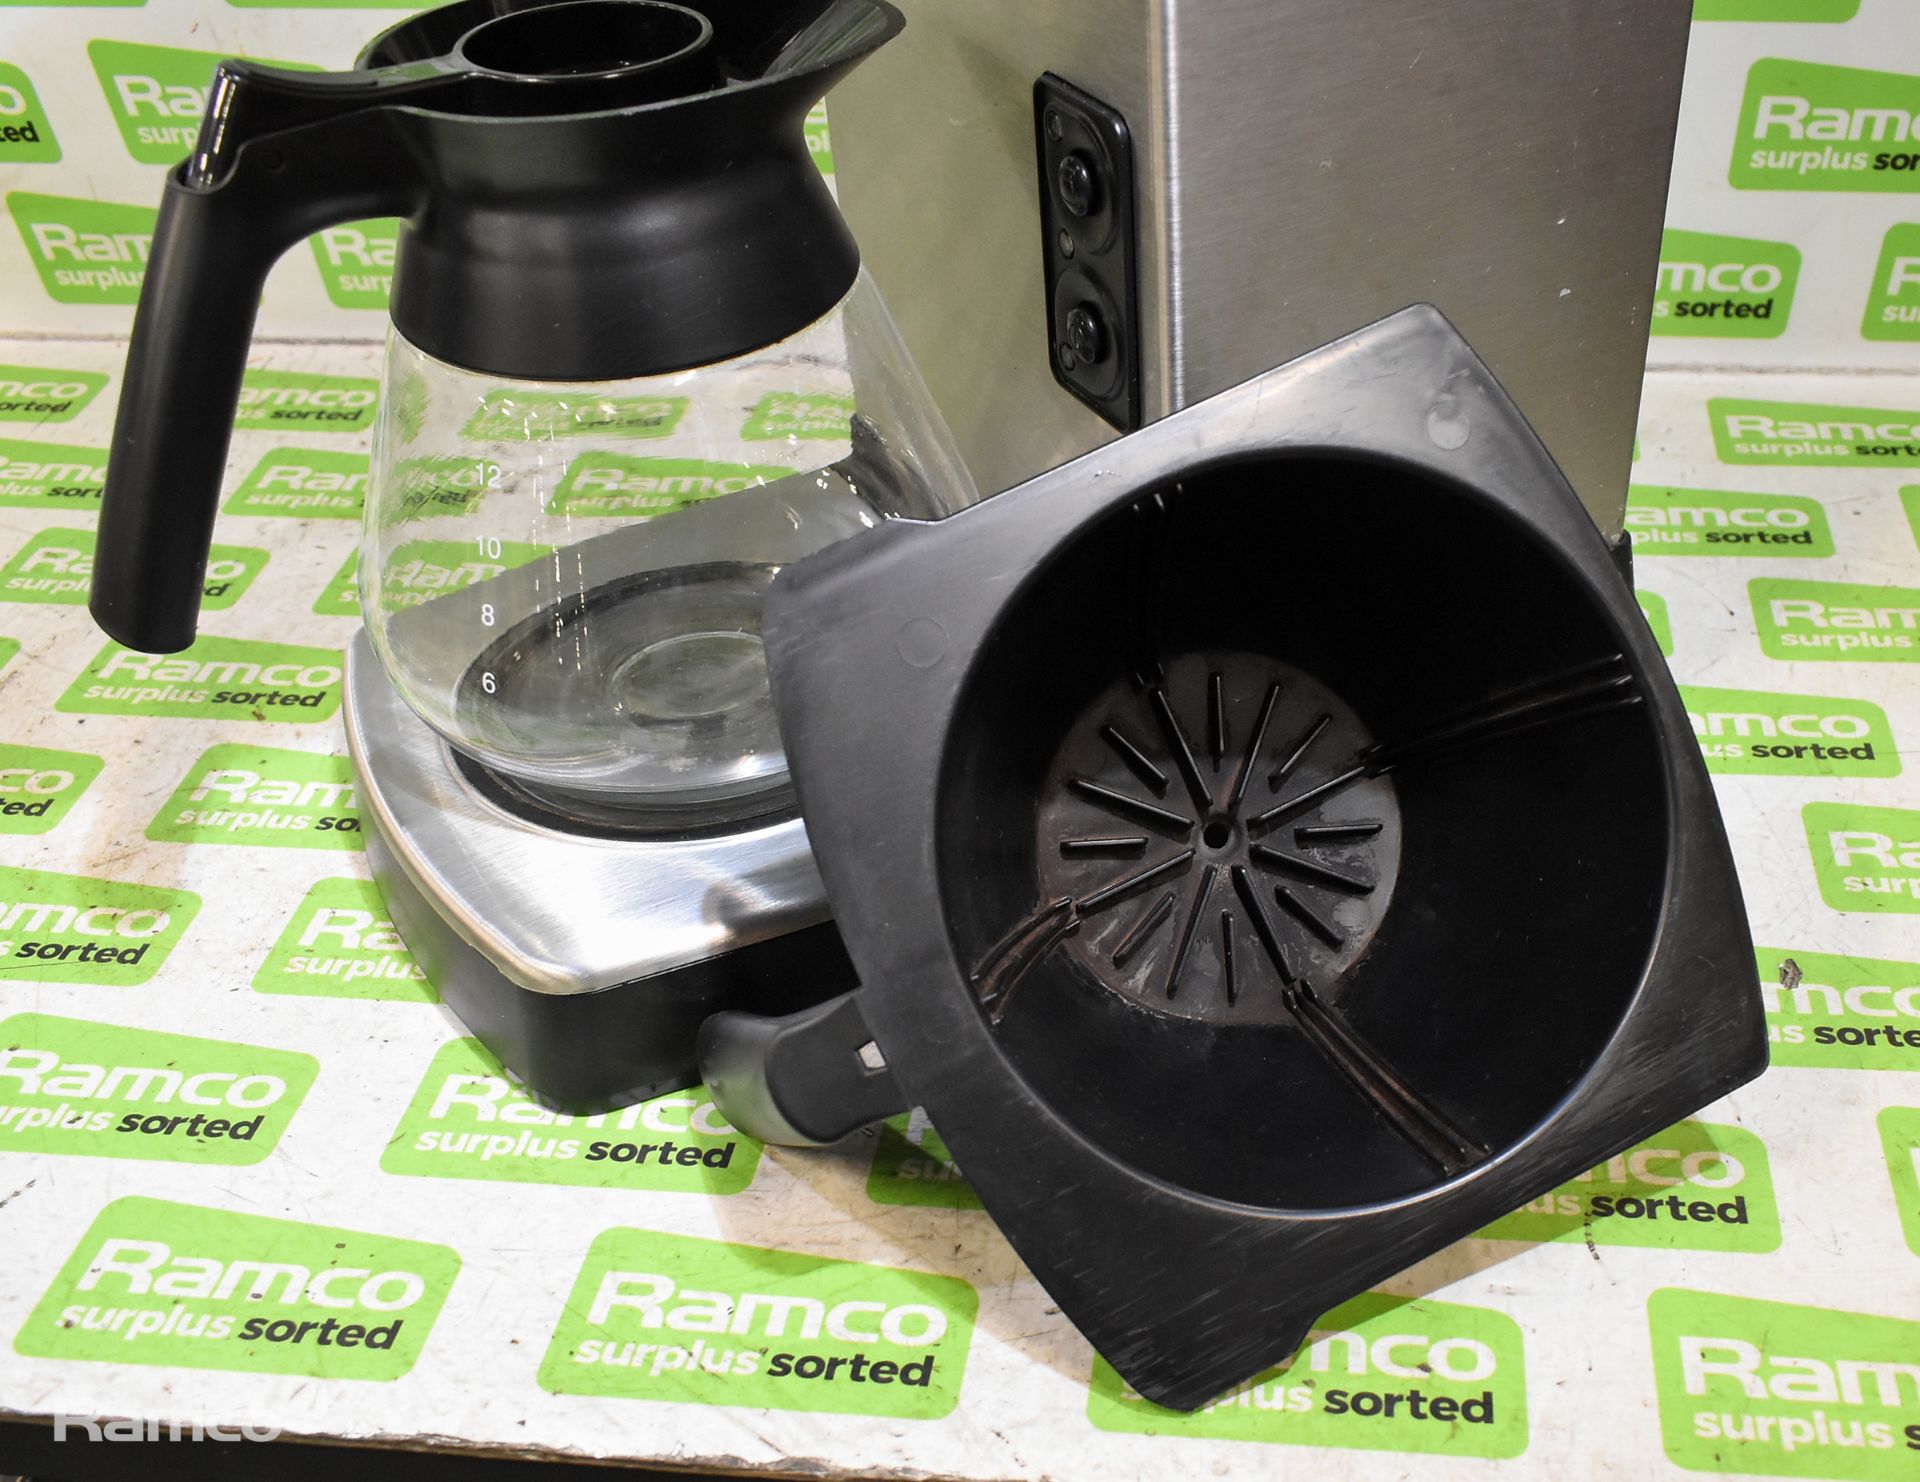 Bravilor Bonamat Novo quick filter coffee machine with 2 coffee jugs - Image 6 of 8